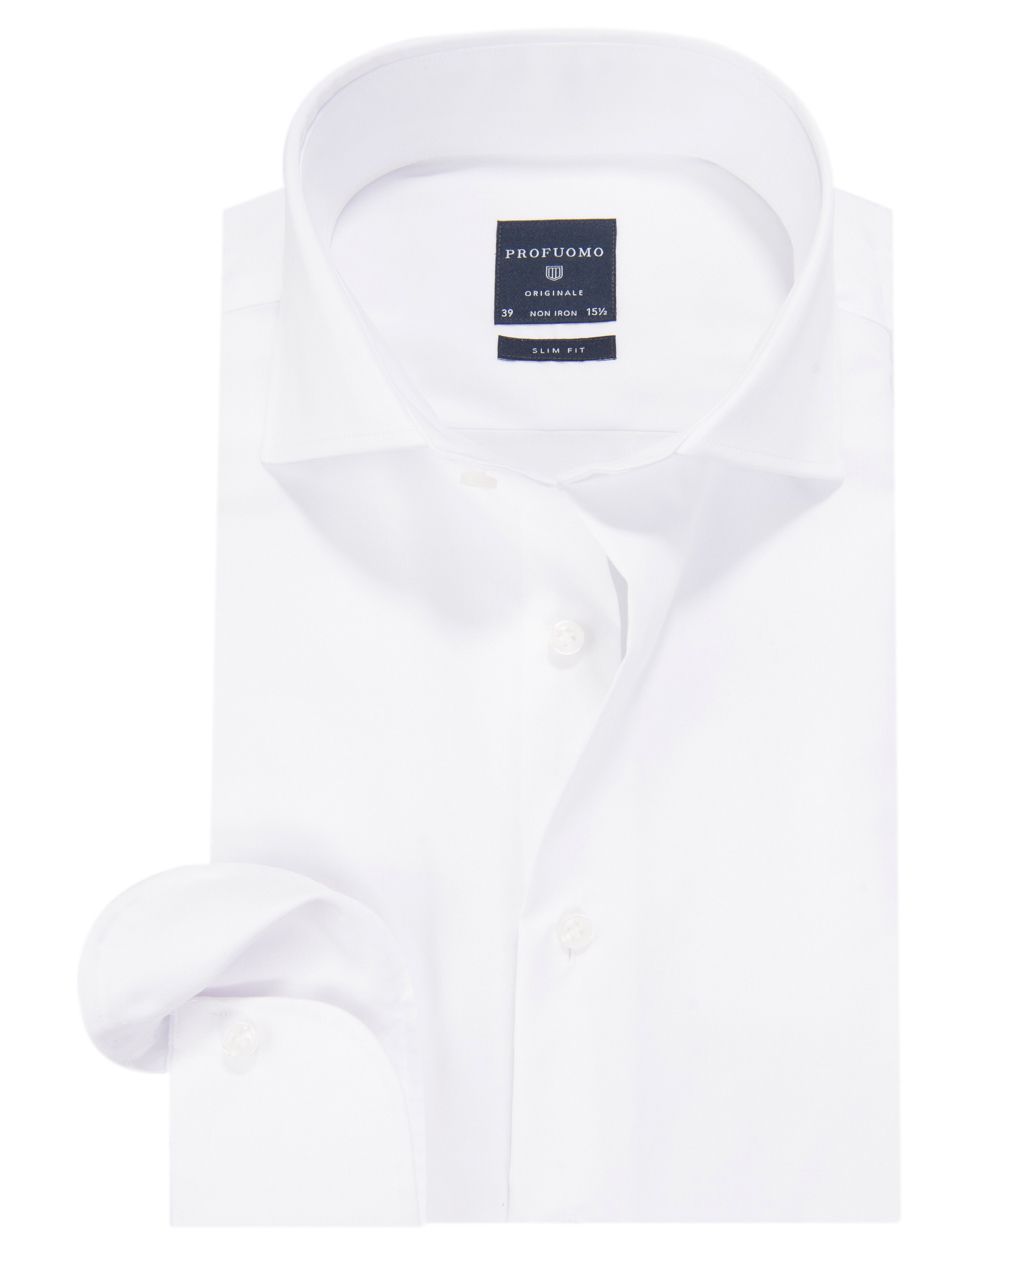 Profuomo Originale Slim fit  - Trouw Overhemd  Wit 018438-00-37